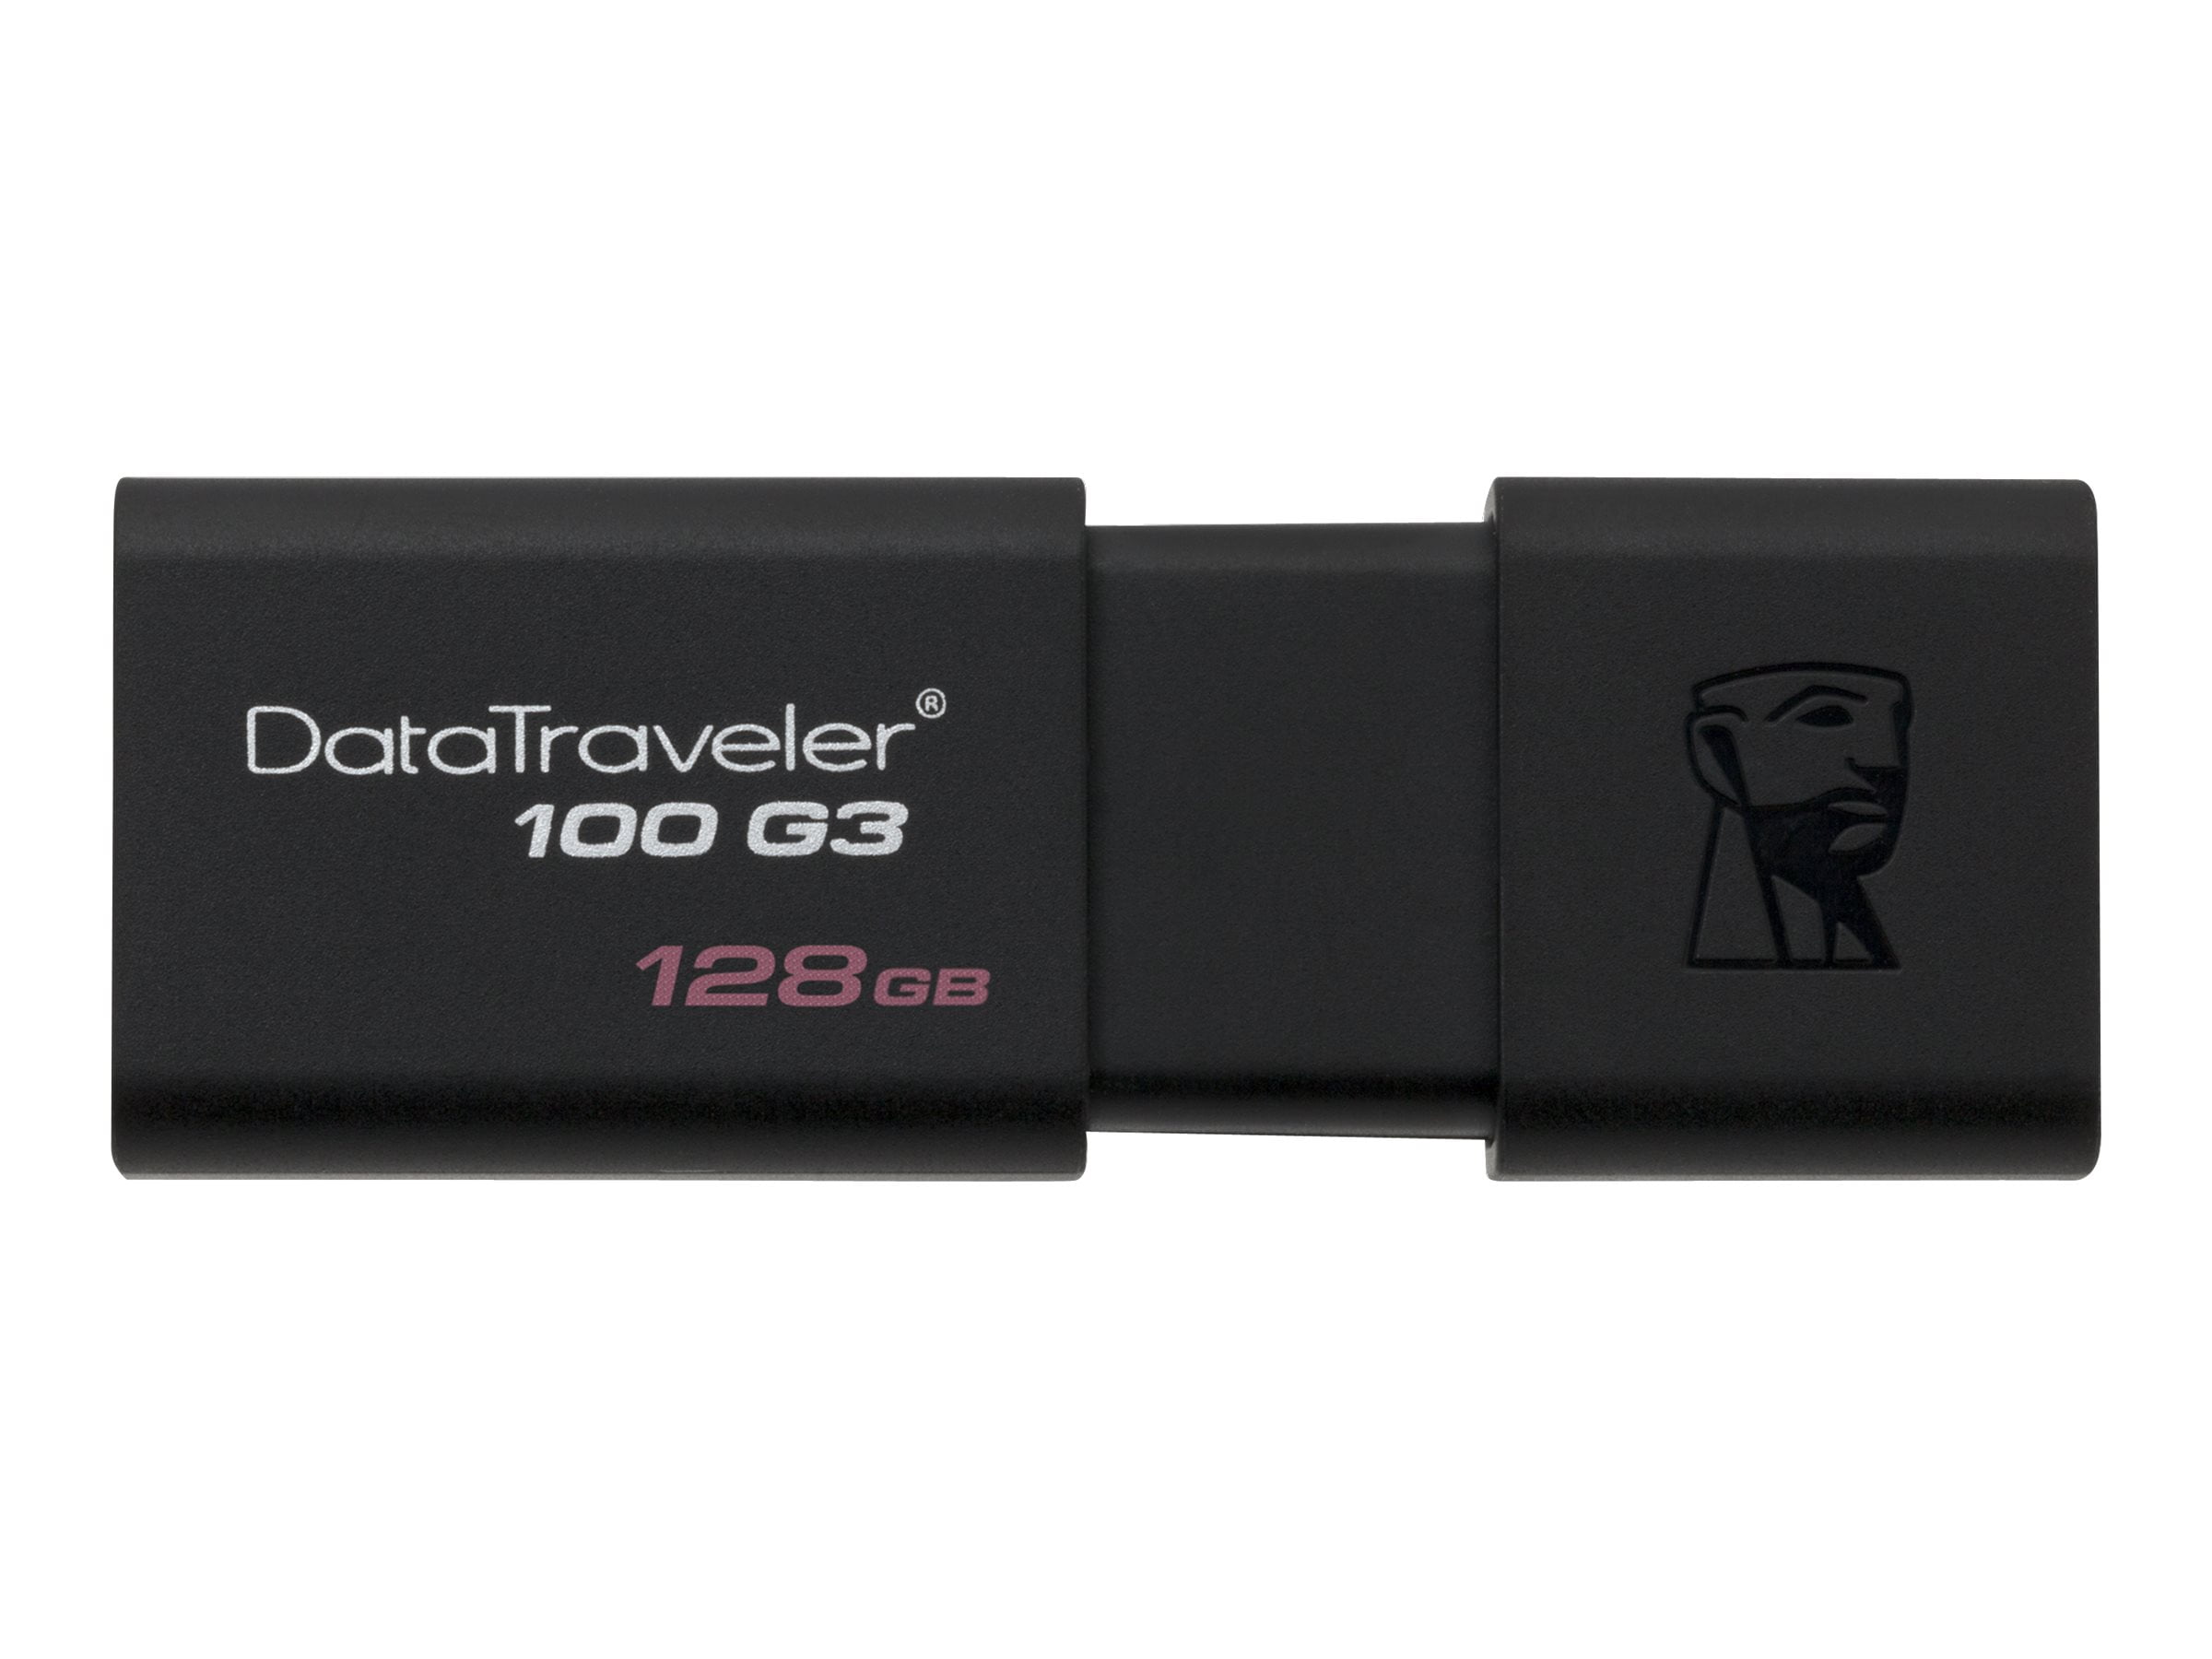 omvendt radar Udførelse Kingston DataTraveler 100 G3 - USB flash drive - 128 GB - USB 3.0 - black -  Walmart.com